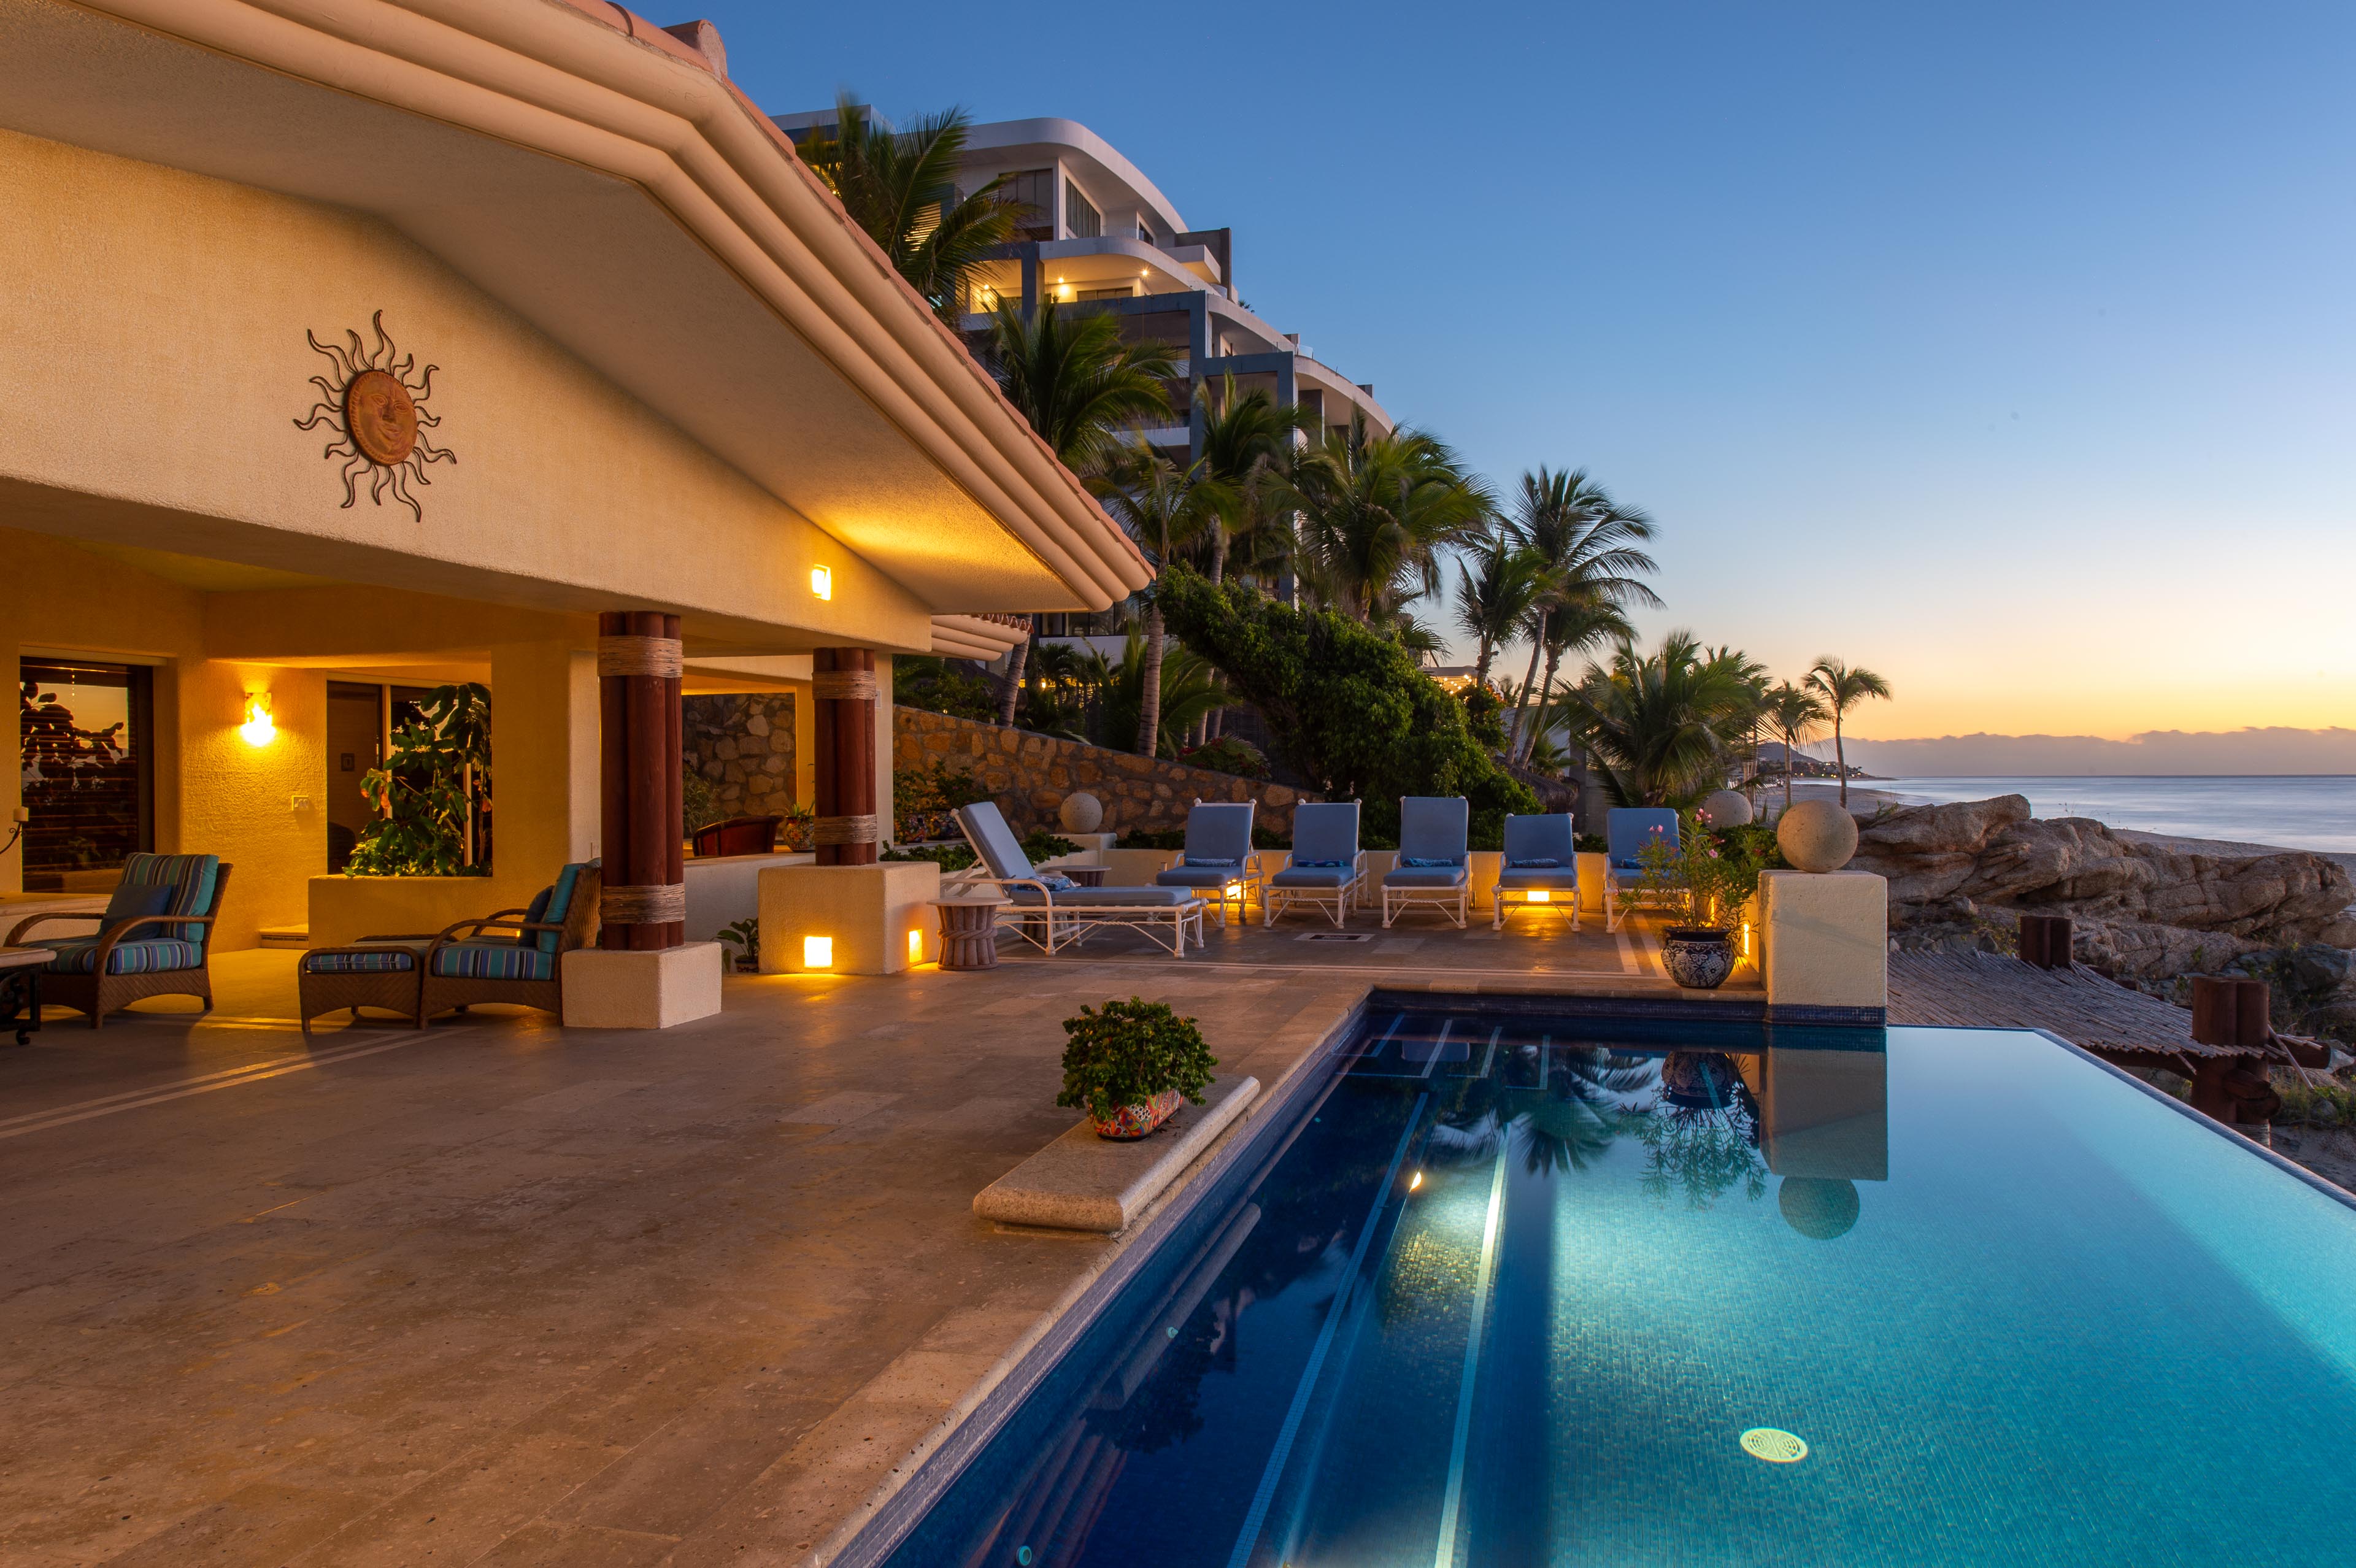 Five stunning Villa Rentals Ideal for Yoga Retreats in Mexico!